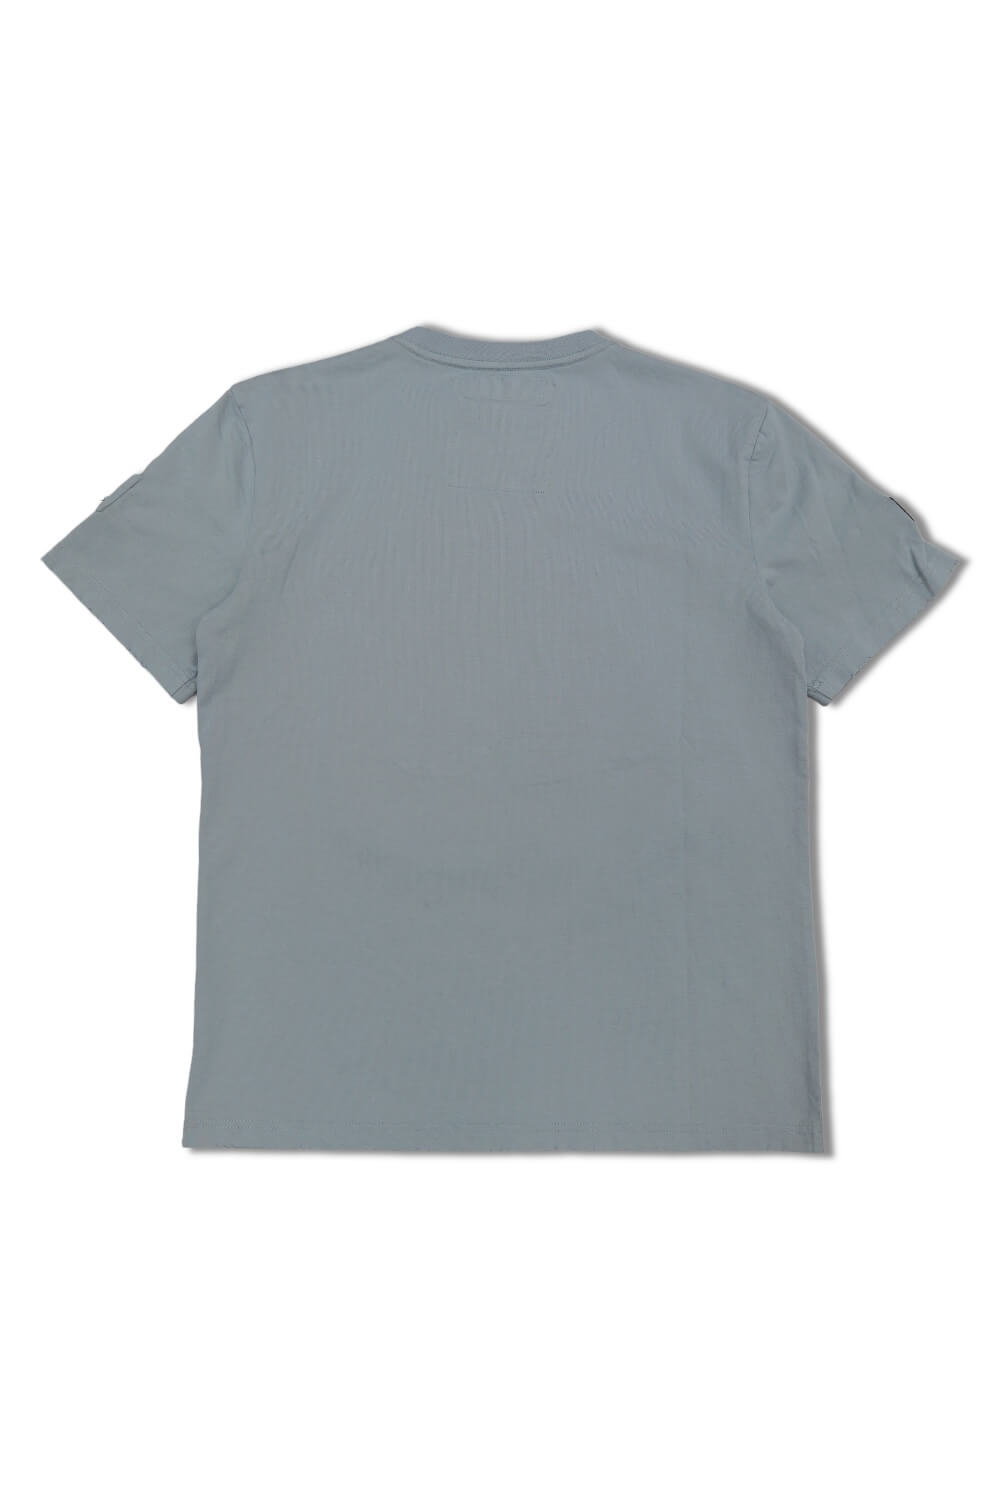 Smugglers Moon T-shirt- Grey/Grey Camo